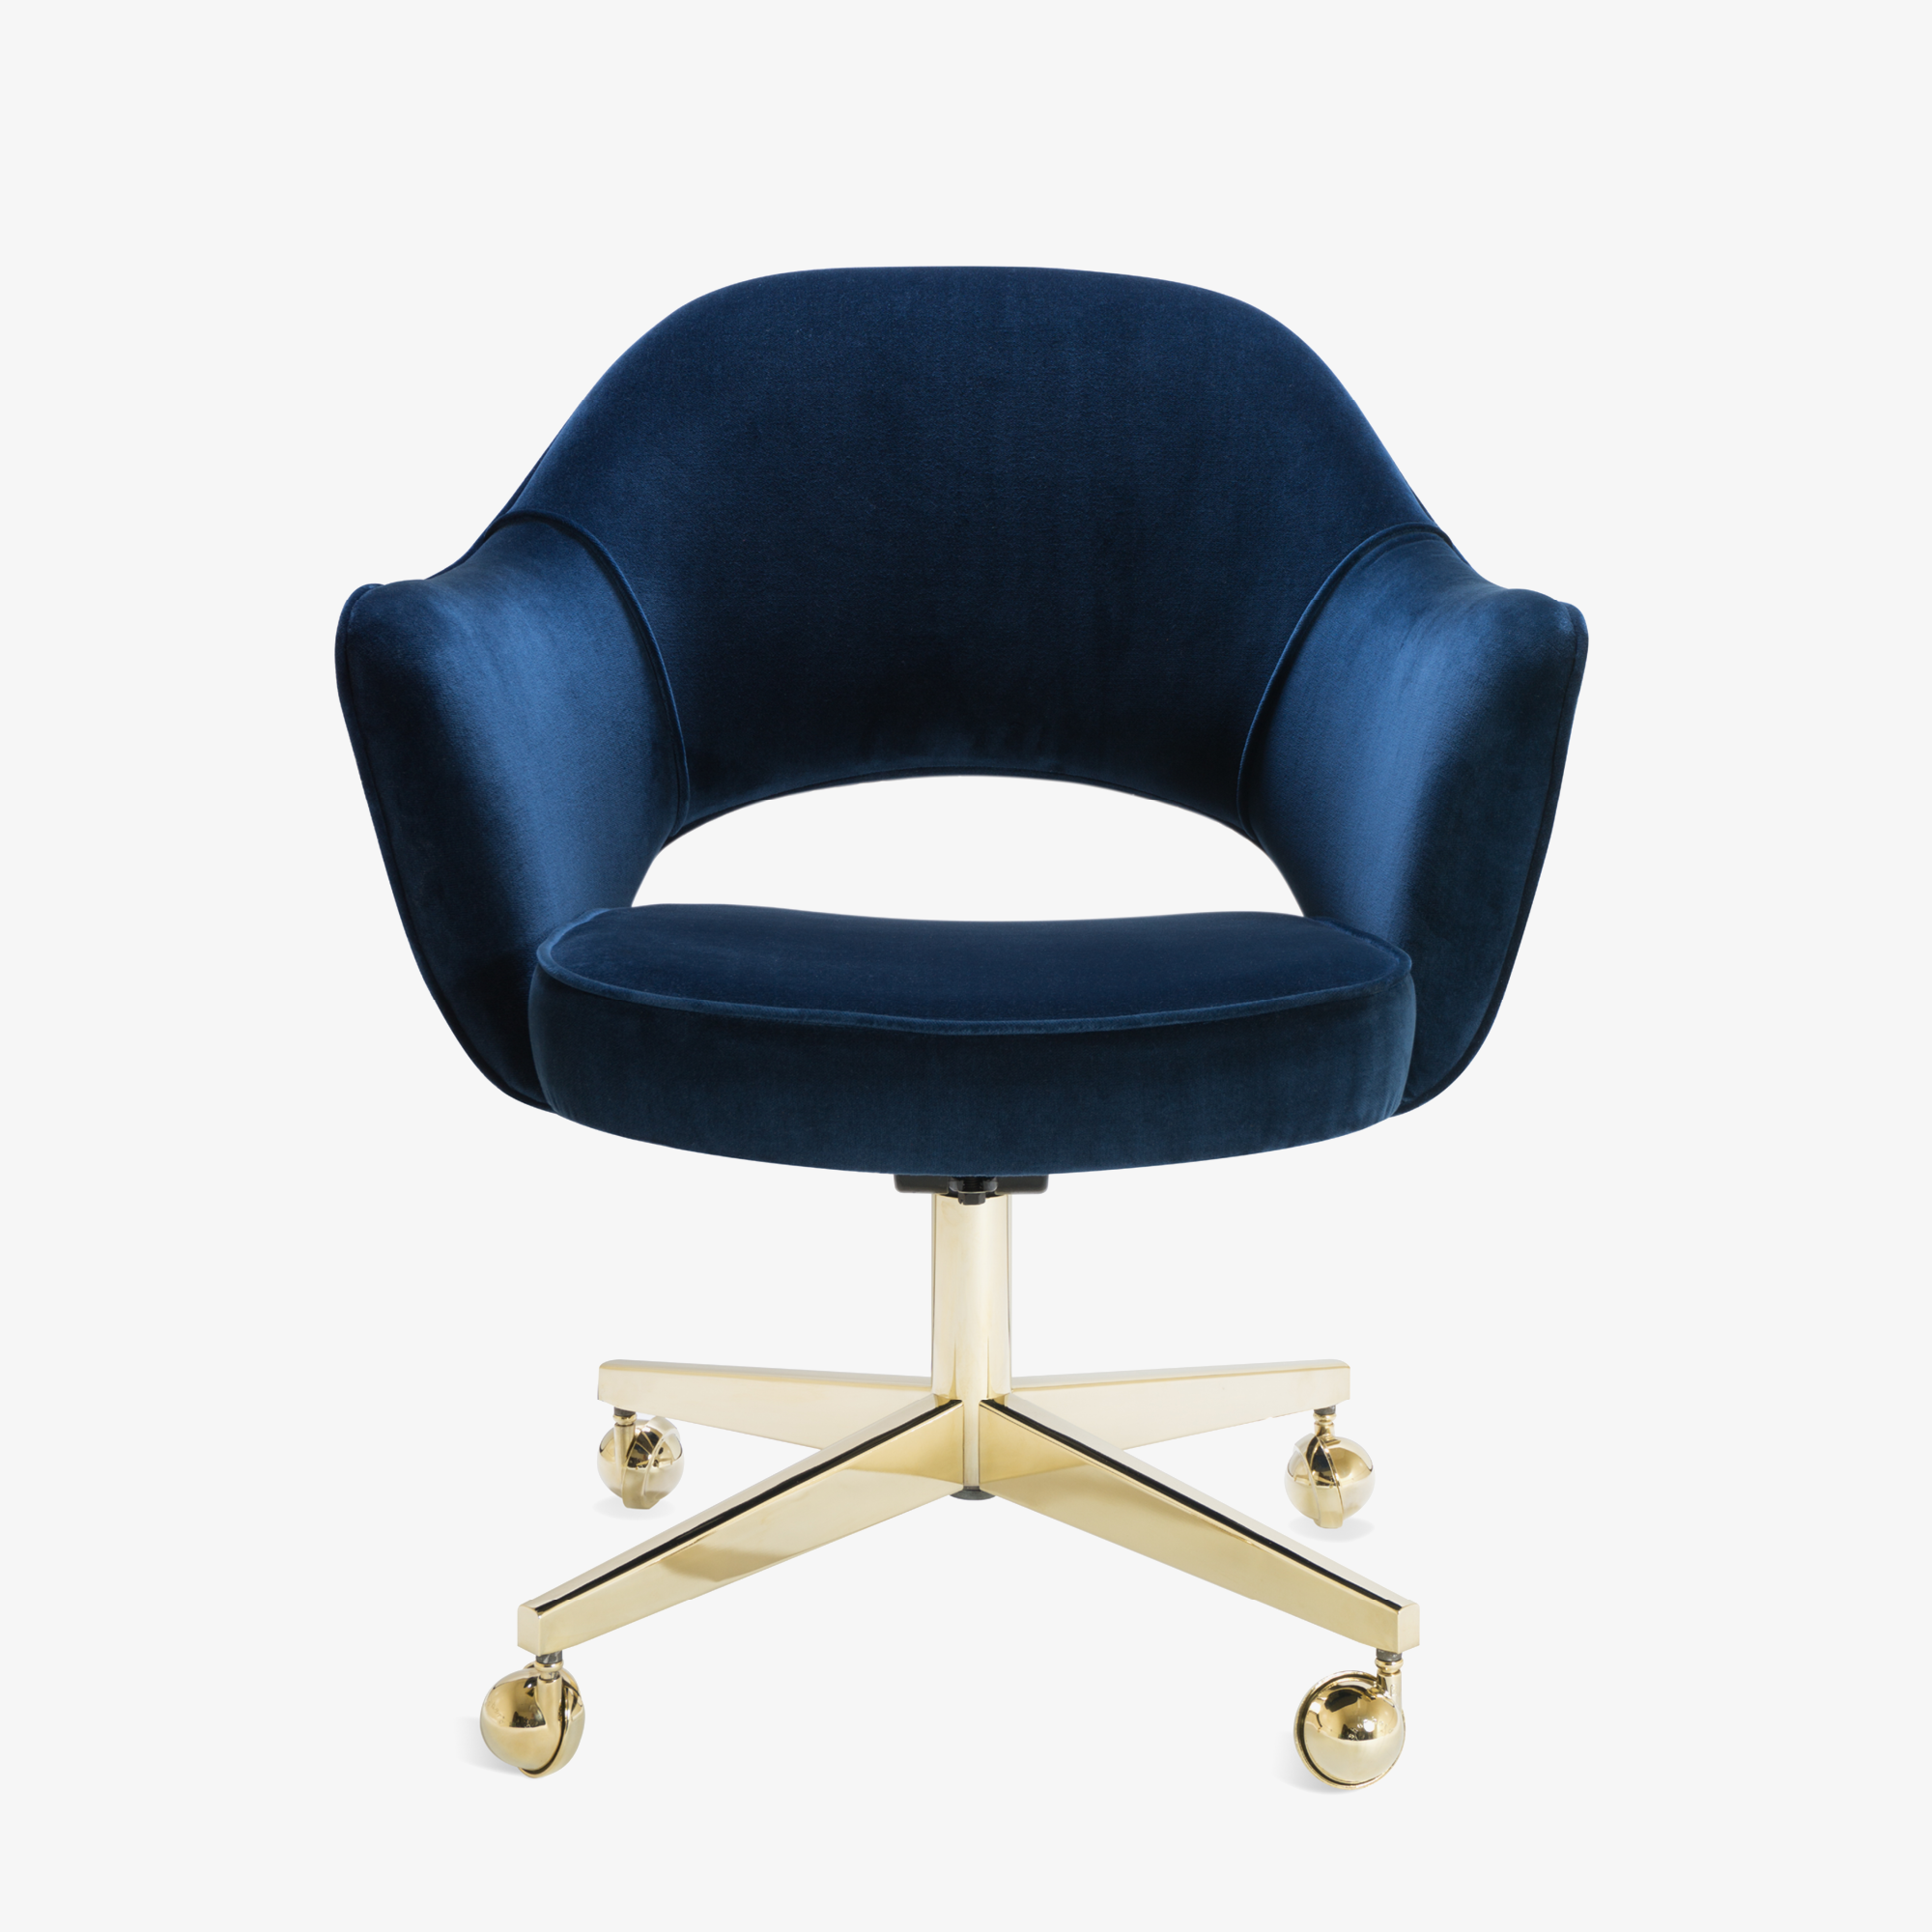 Saarinen Executive Arm Chair in Navy Velvet, Swivel Base, 24k Gold Edition2.png